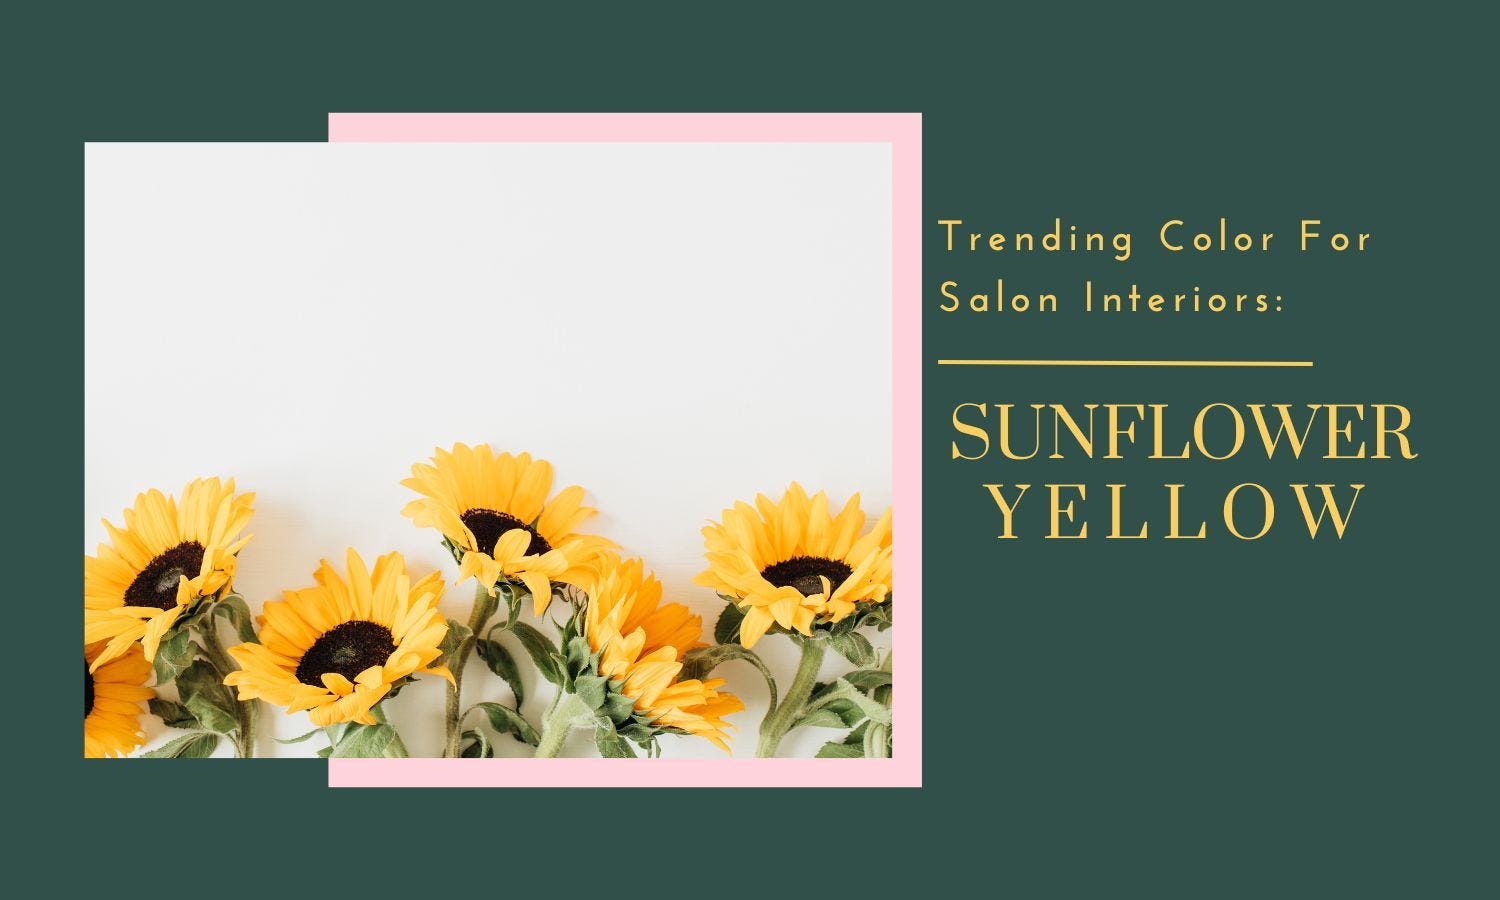 Trending Color For Salon Interiors: Sunflower Yellow